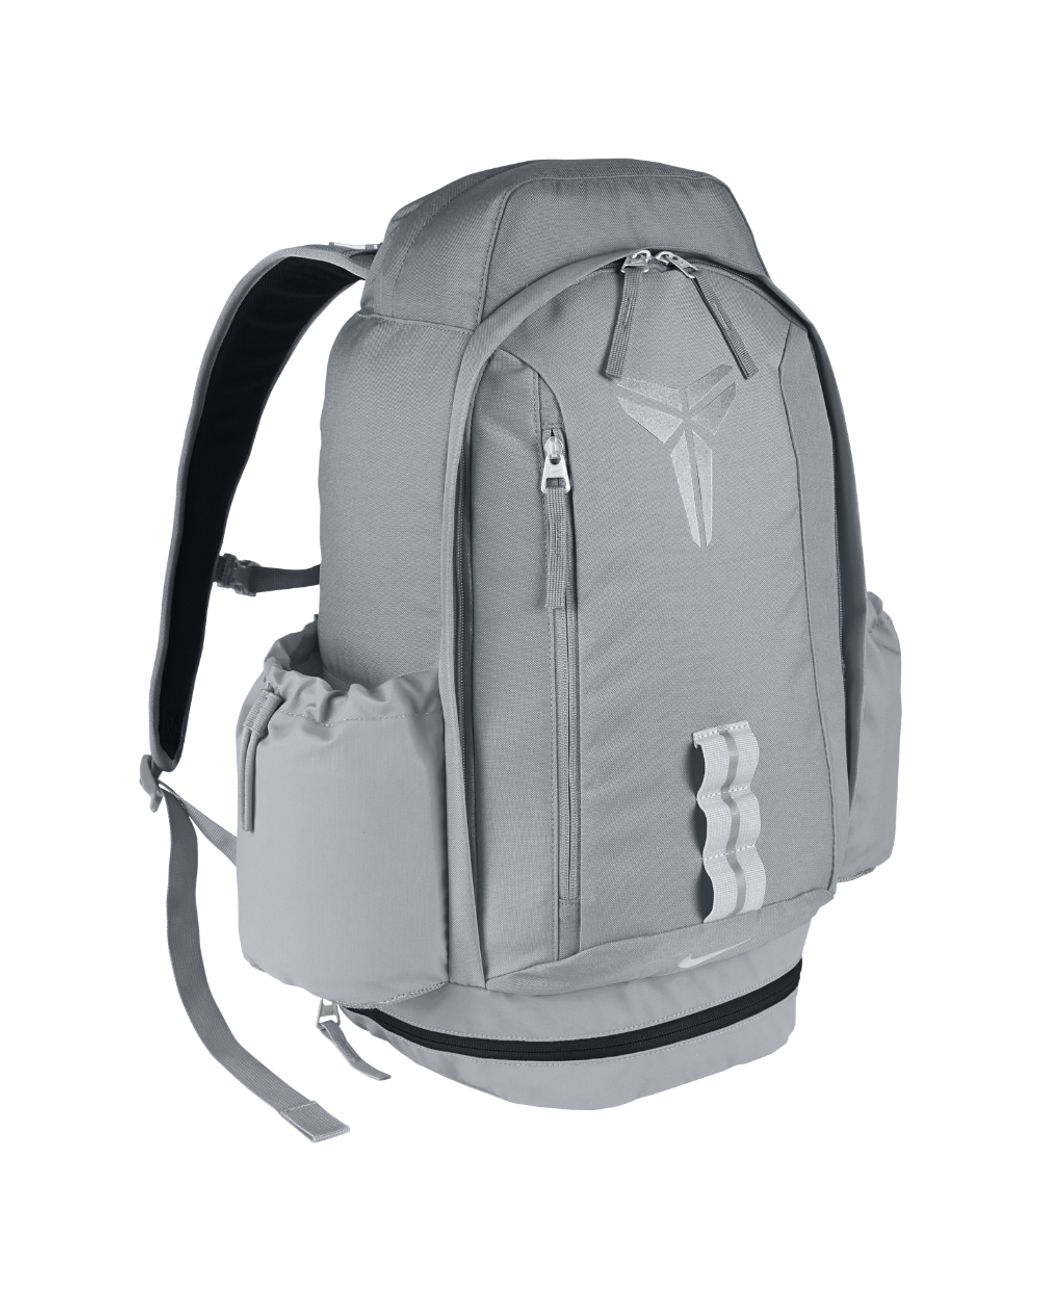 Nike Kobe Mamba Xi Basketball Backpack (grey) in Metallic | Lyst